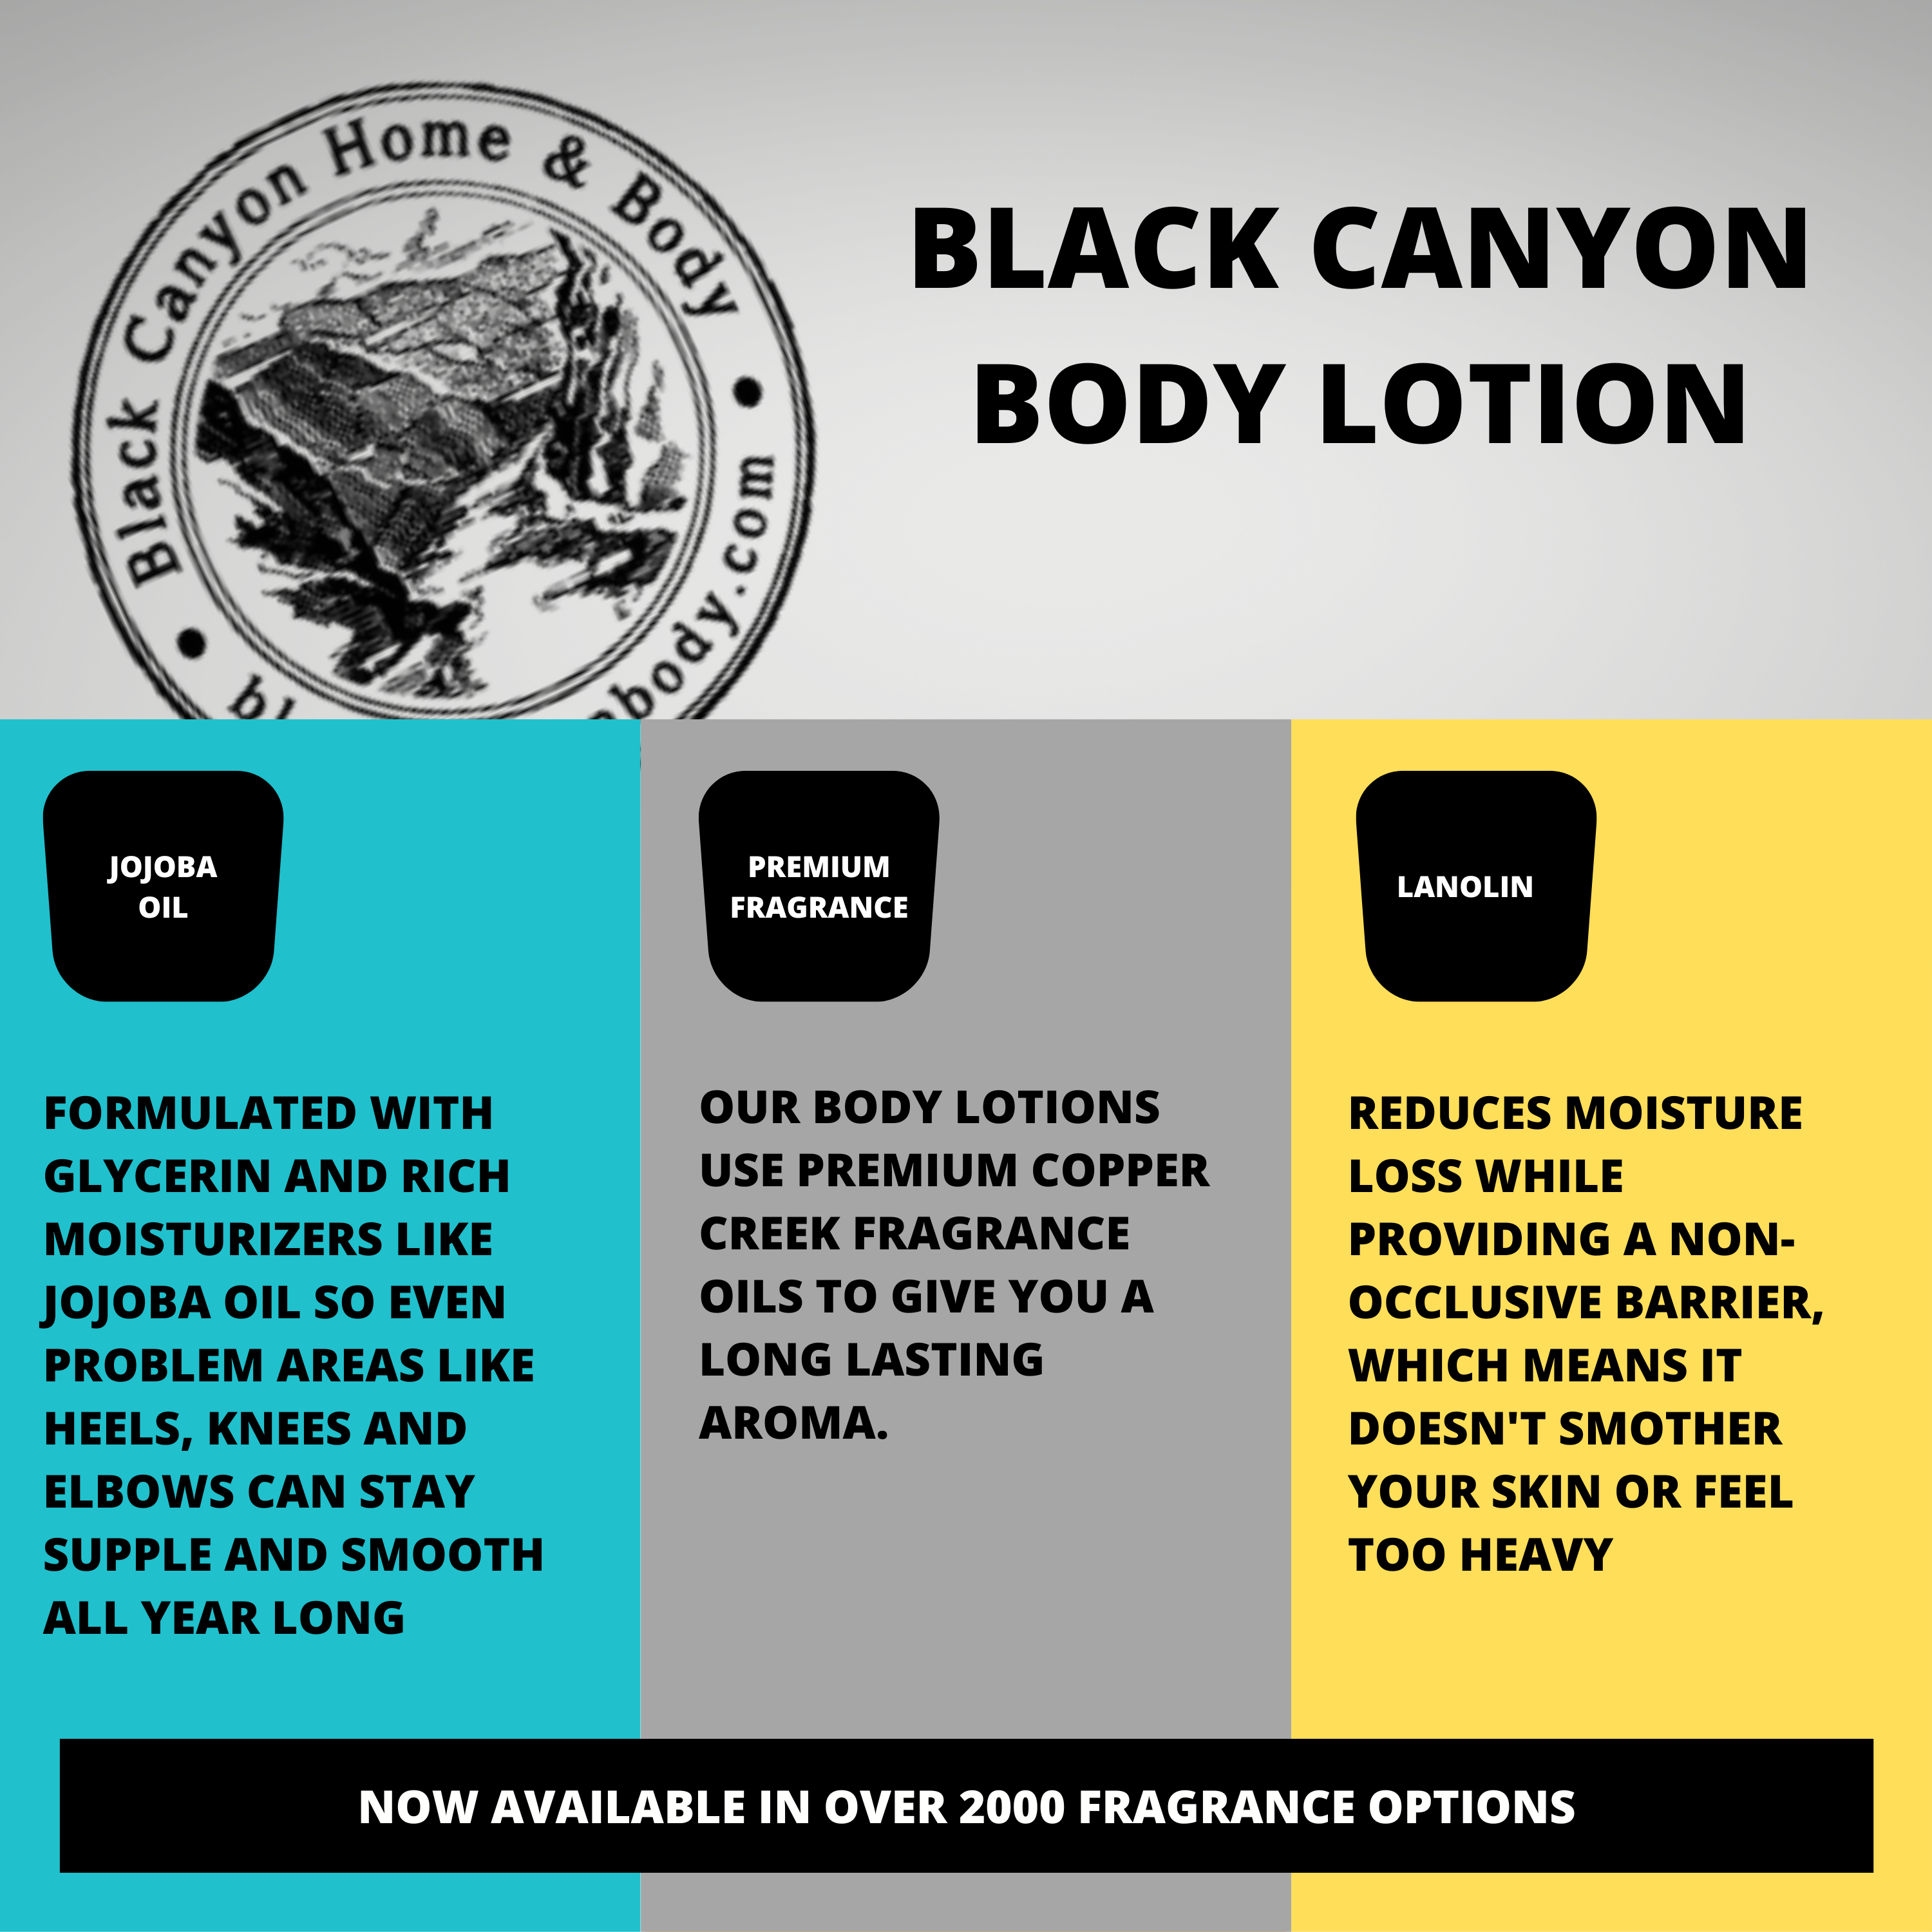 Black Canyon Black Cherry Vanilla Scented Luxury Body Lotion with Lanolin and Jojoba Oil